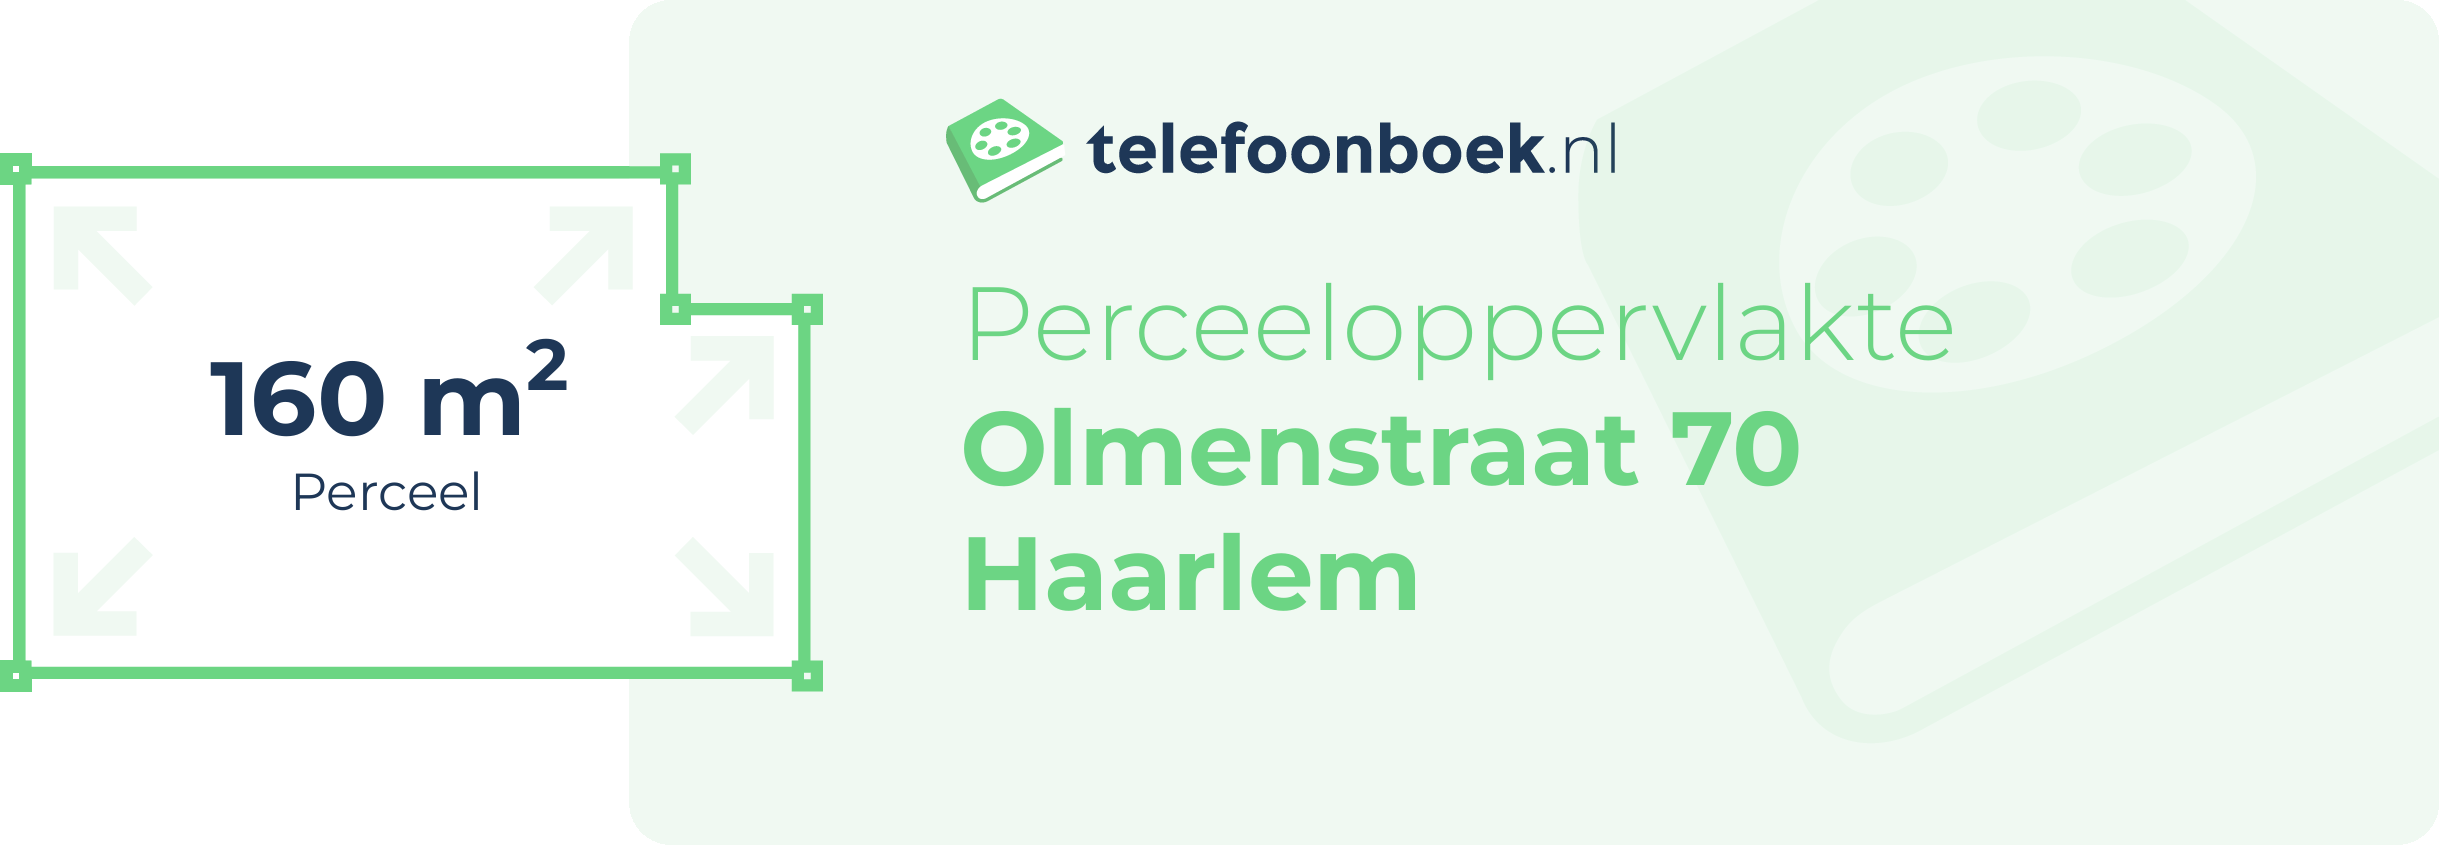 Perceeloppervlakte Olmenstraat 70 Haarlem